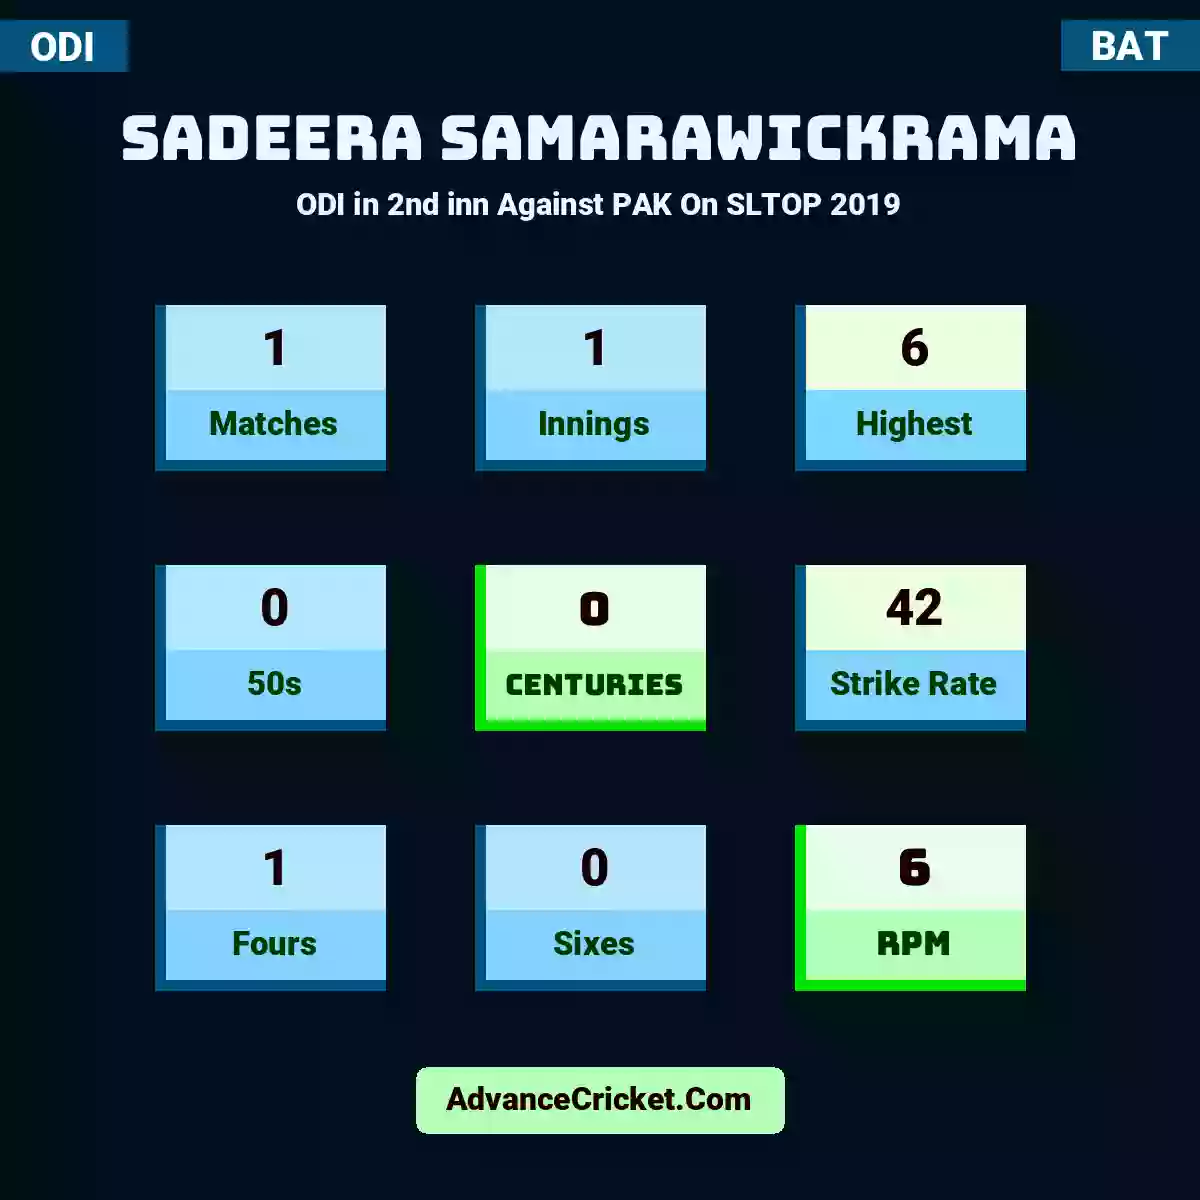 Sadeera Samarawickrama ODI  in 2nd inn Against PAK On SLTOP 2019, Sadeera Samarawickrama played 1 matches, scored 6 runs as highest, 0 half-centuries, and 0 centuries, with a strike rate of 42. S.Samarawickrama hit 1 fours and 0 sixes, with an RPM of 6.